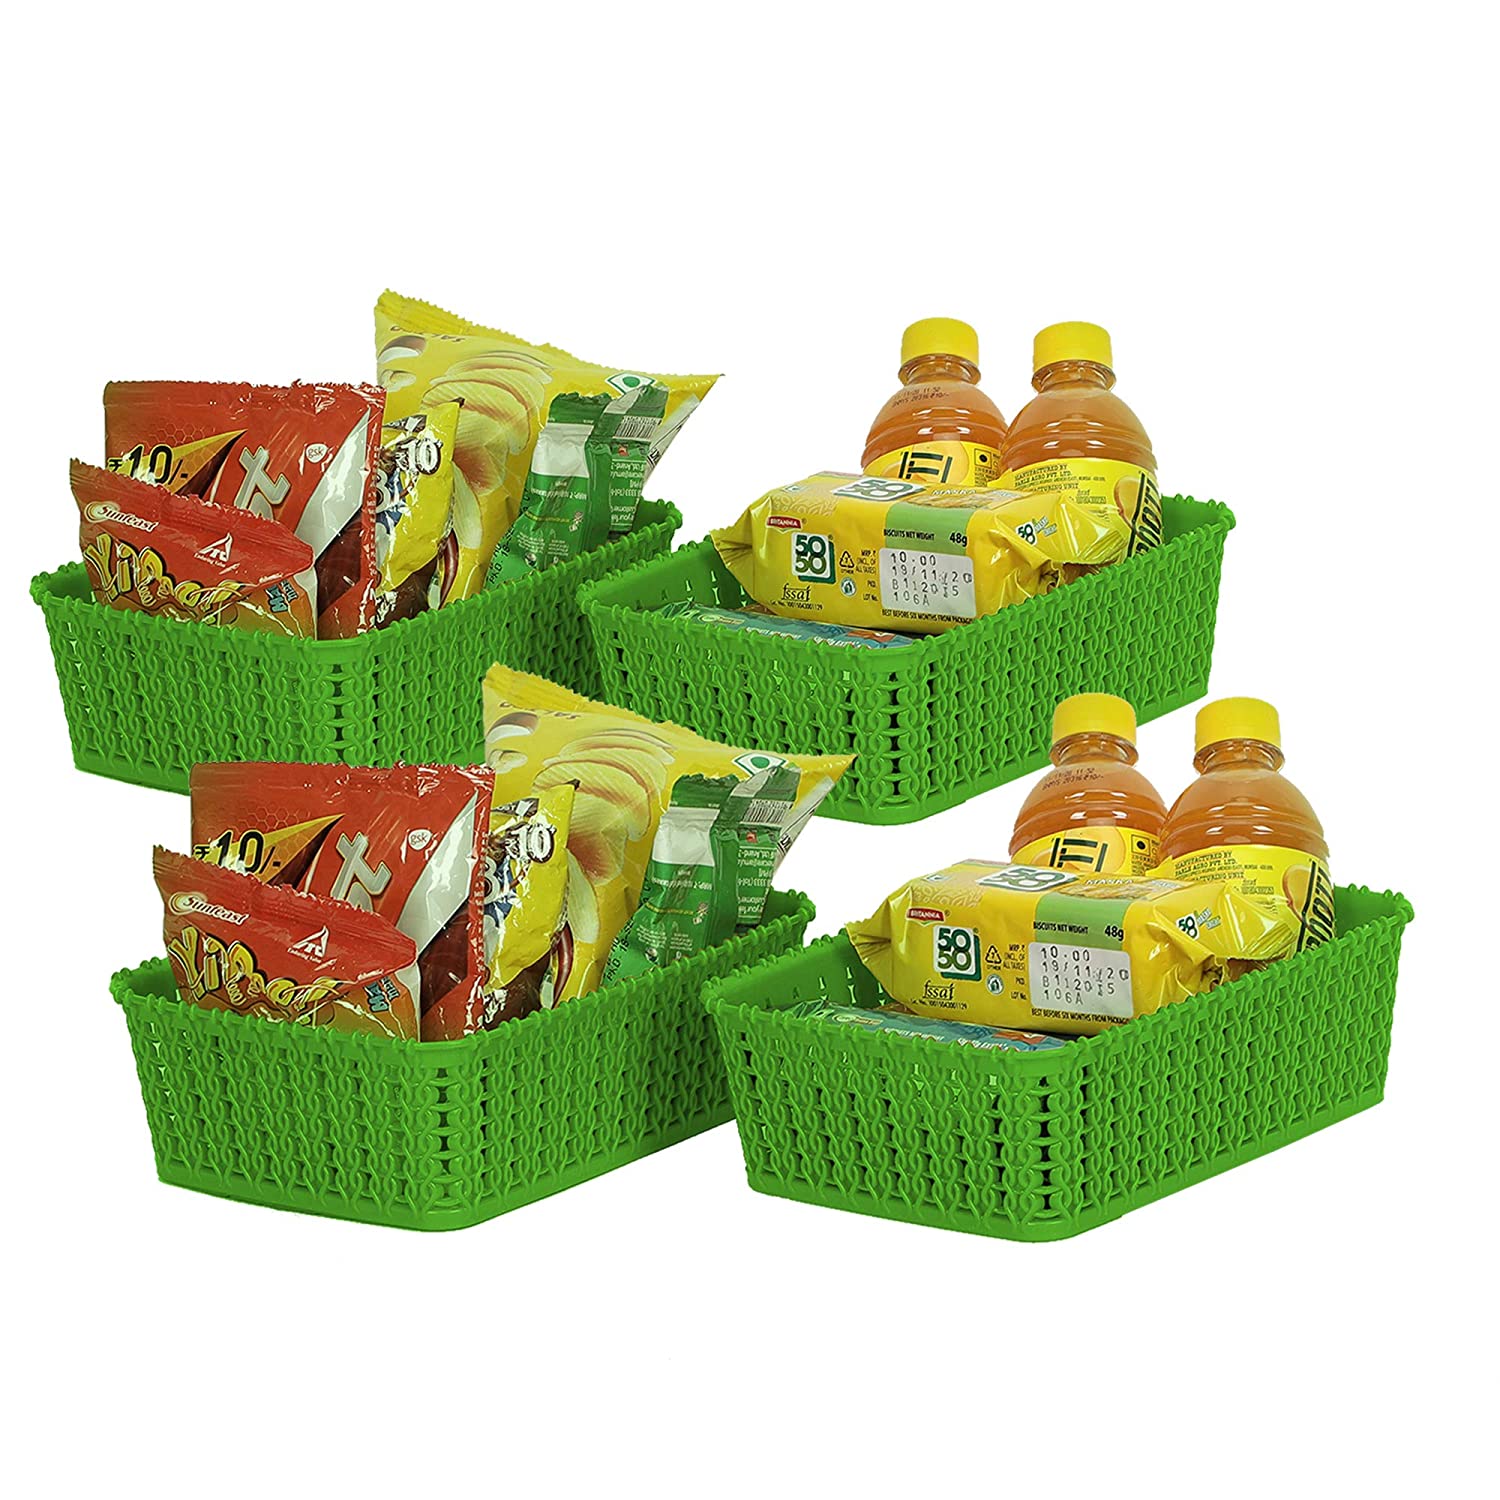 Cutting EDGE Multipurpose Sturdy Woven Storage Baskets Organiser for Kitchen, Office, Stationary, Cosmetics - Green (Set of 4, Mini)